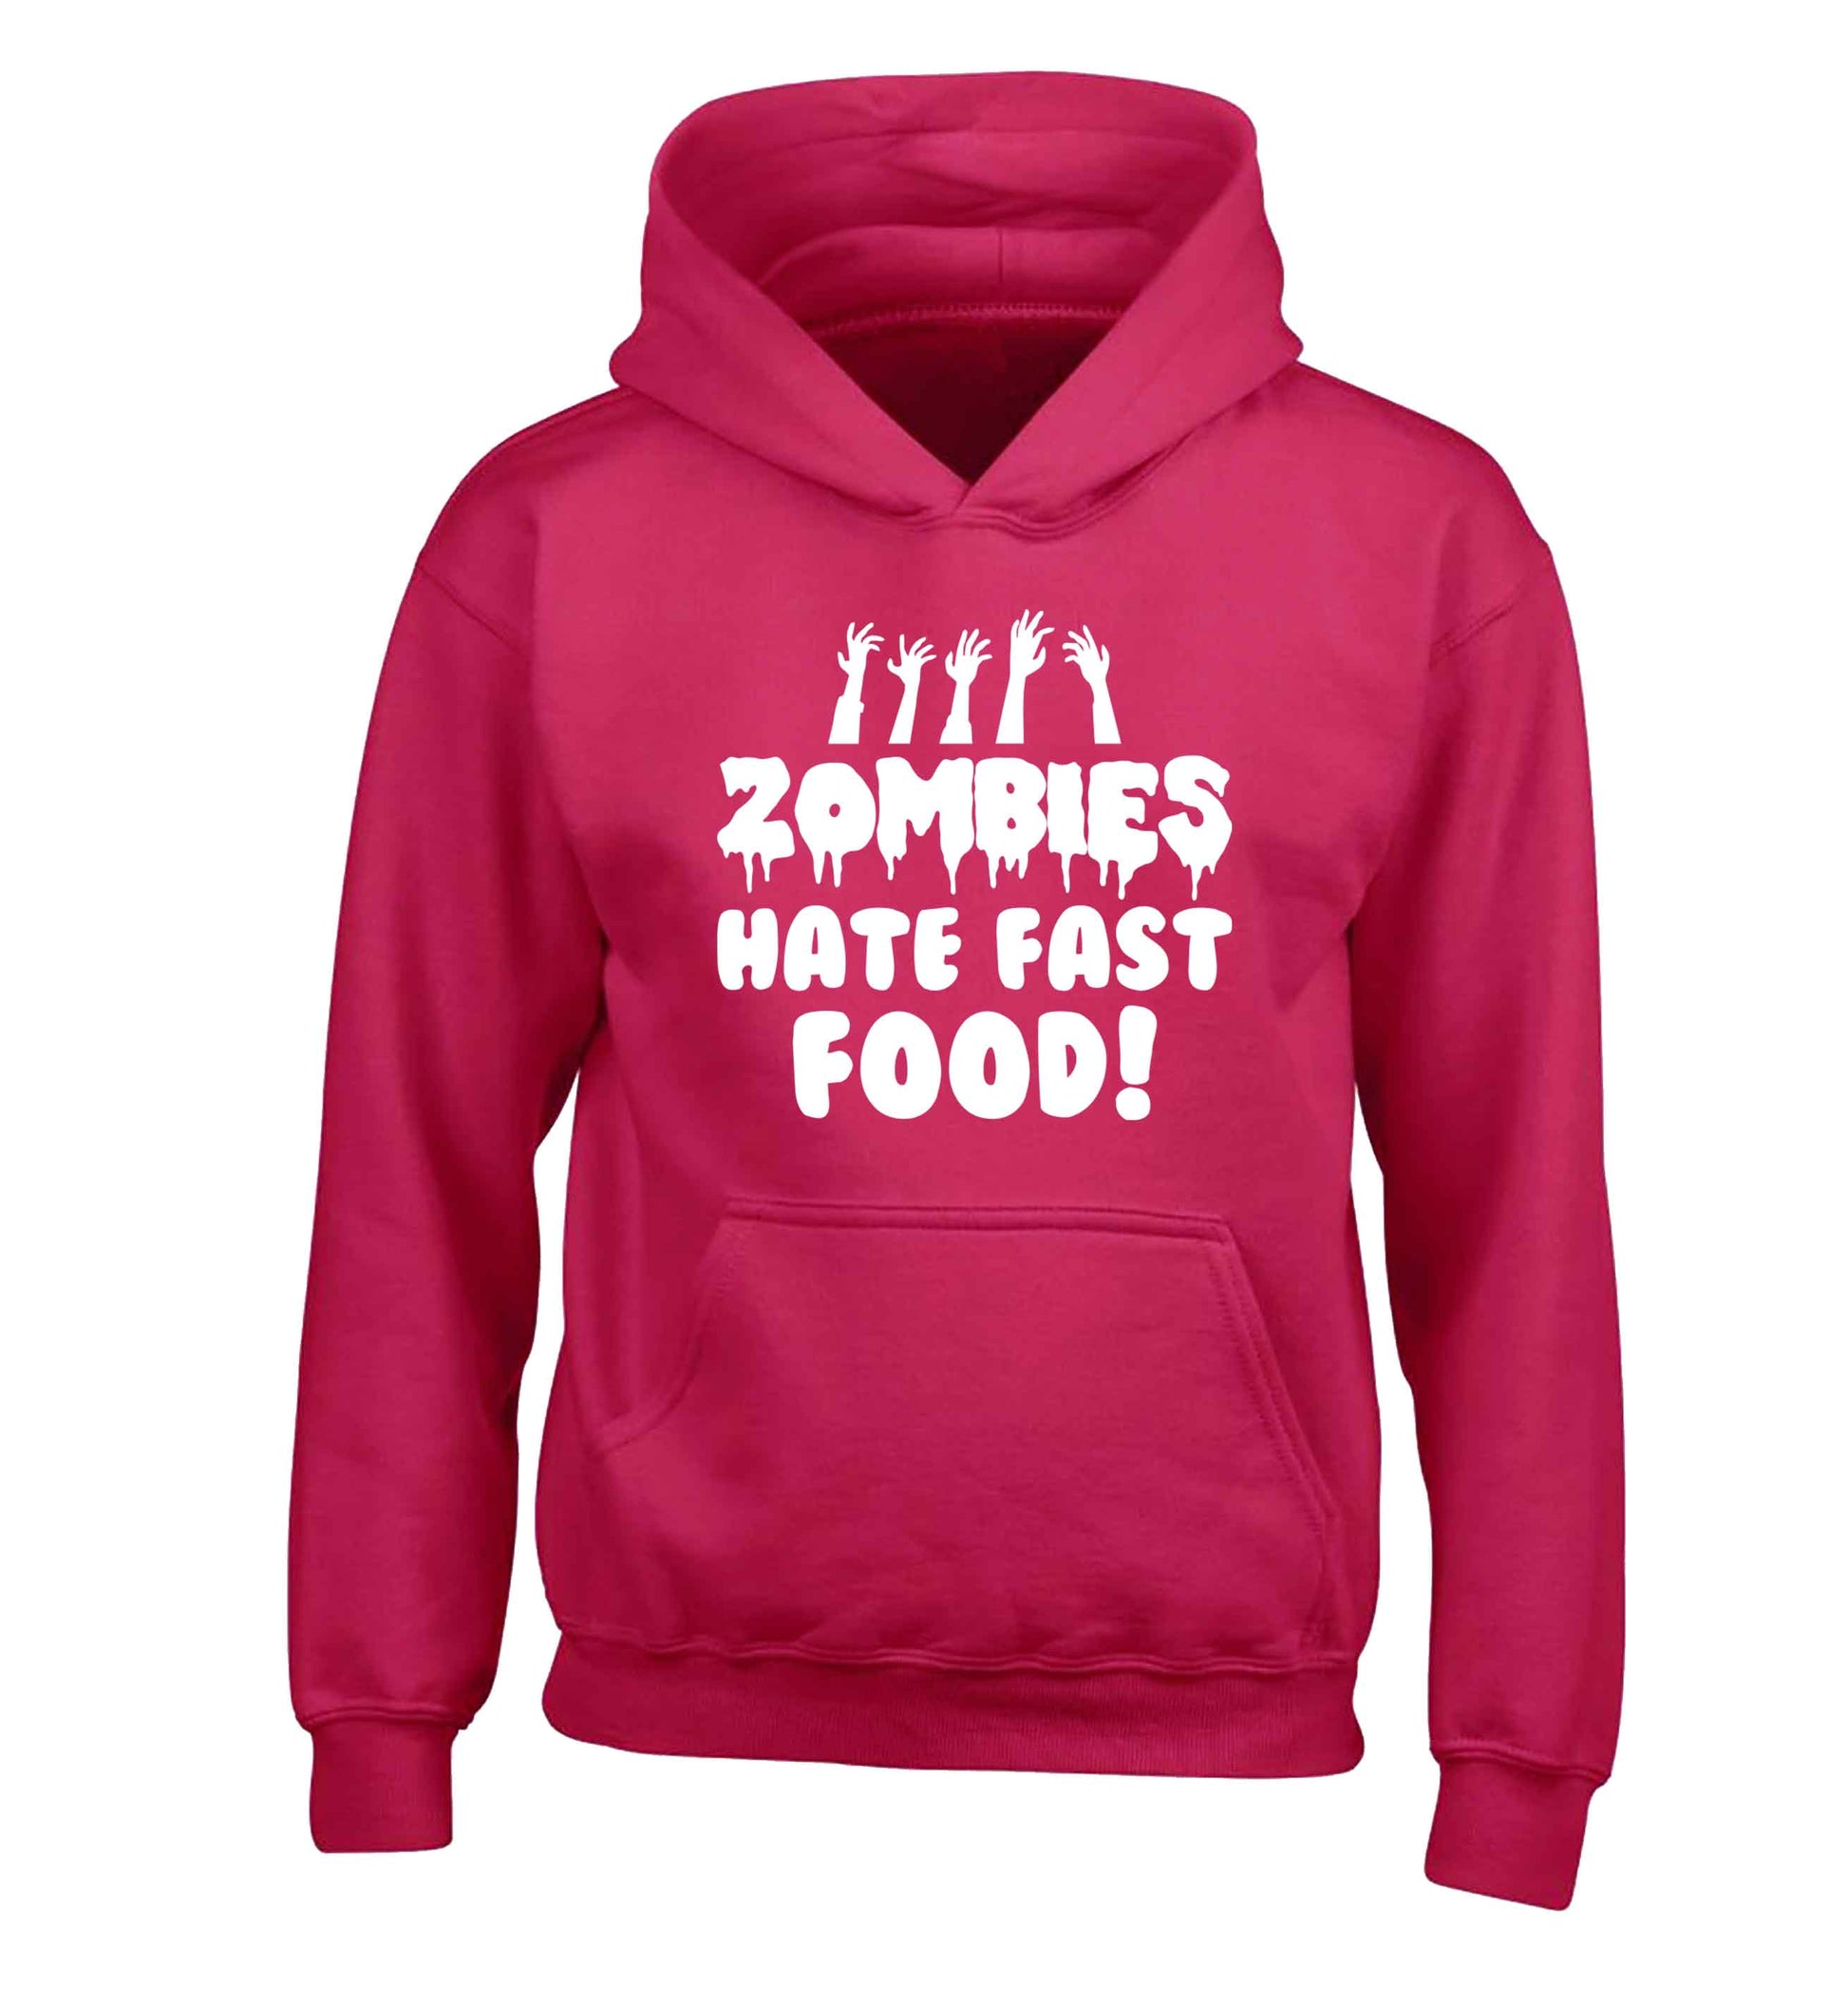 Zombies hate fast food children's pink hoodie 12-13 Years